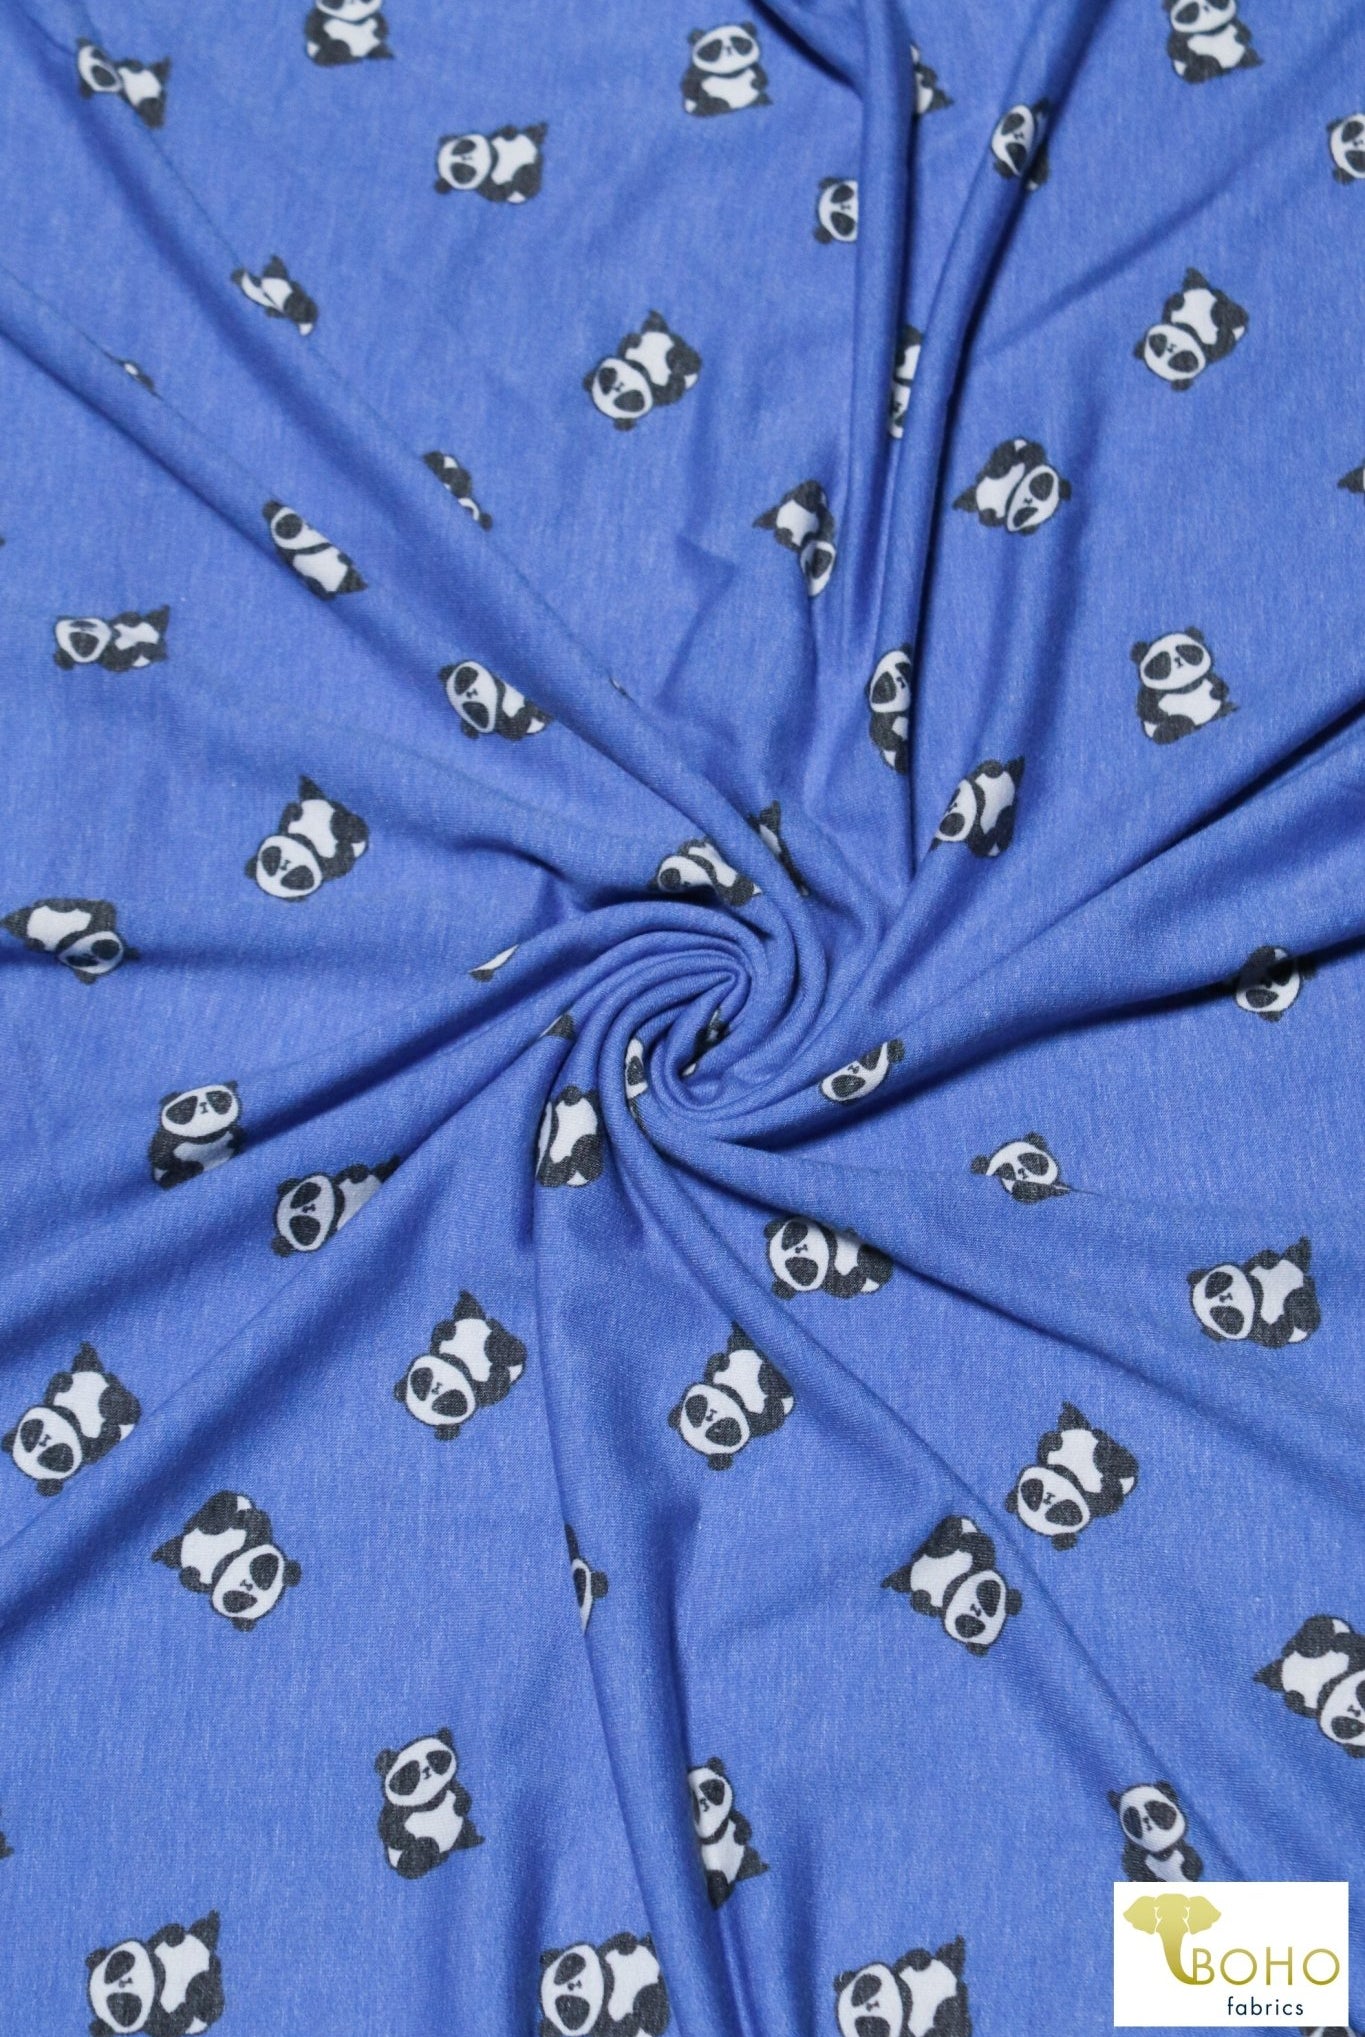 Pandas on Blue, French Terry Knit Print. FTP-321-BLU - Boho Fabrics